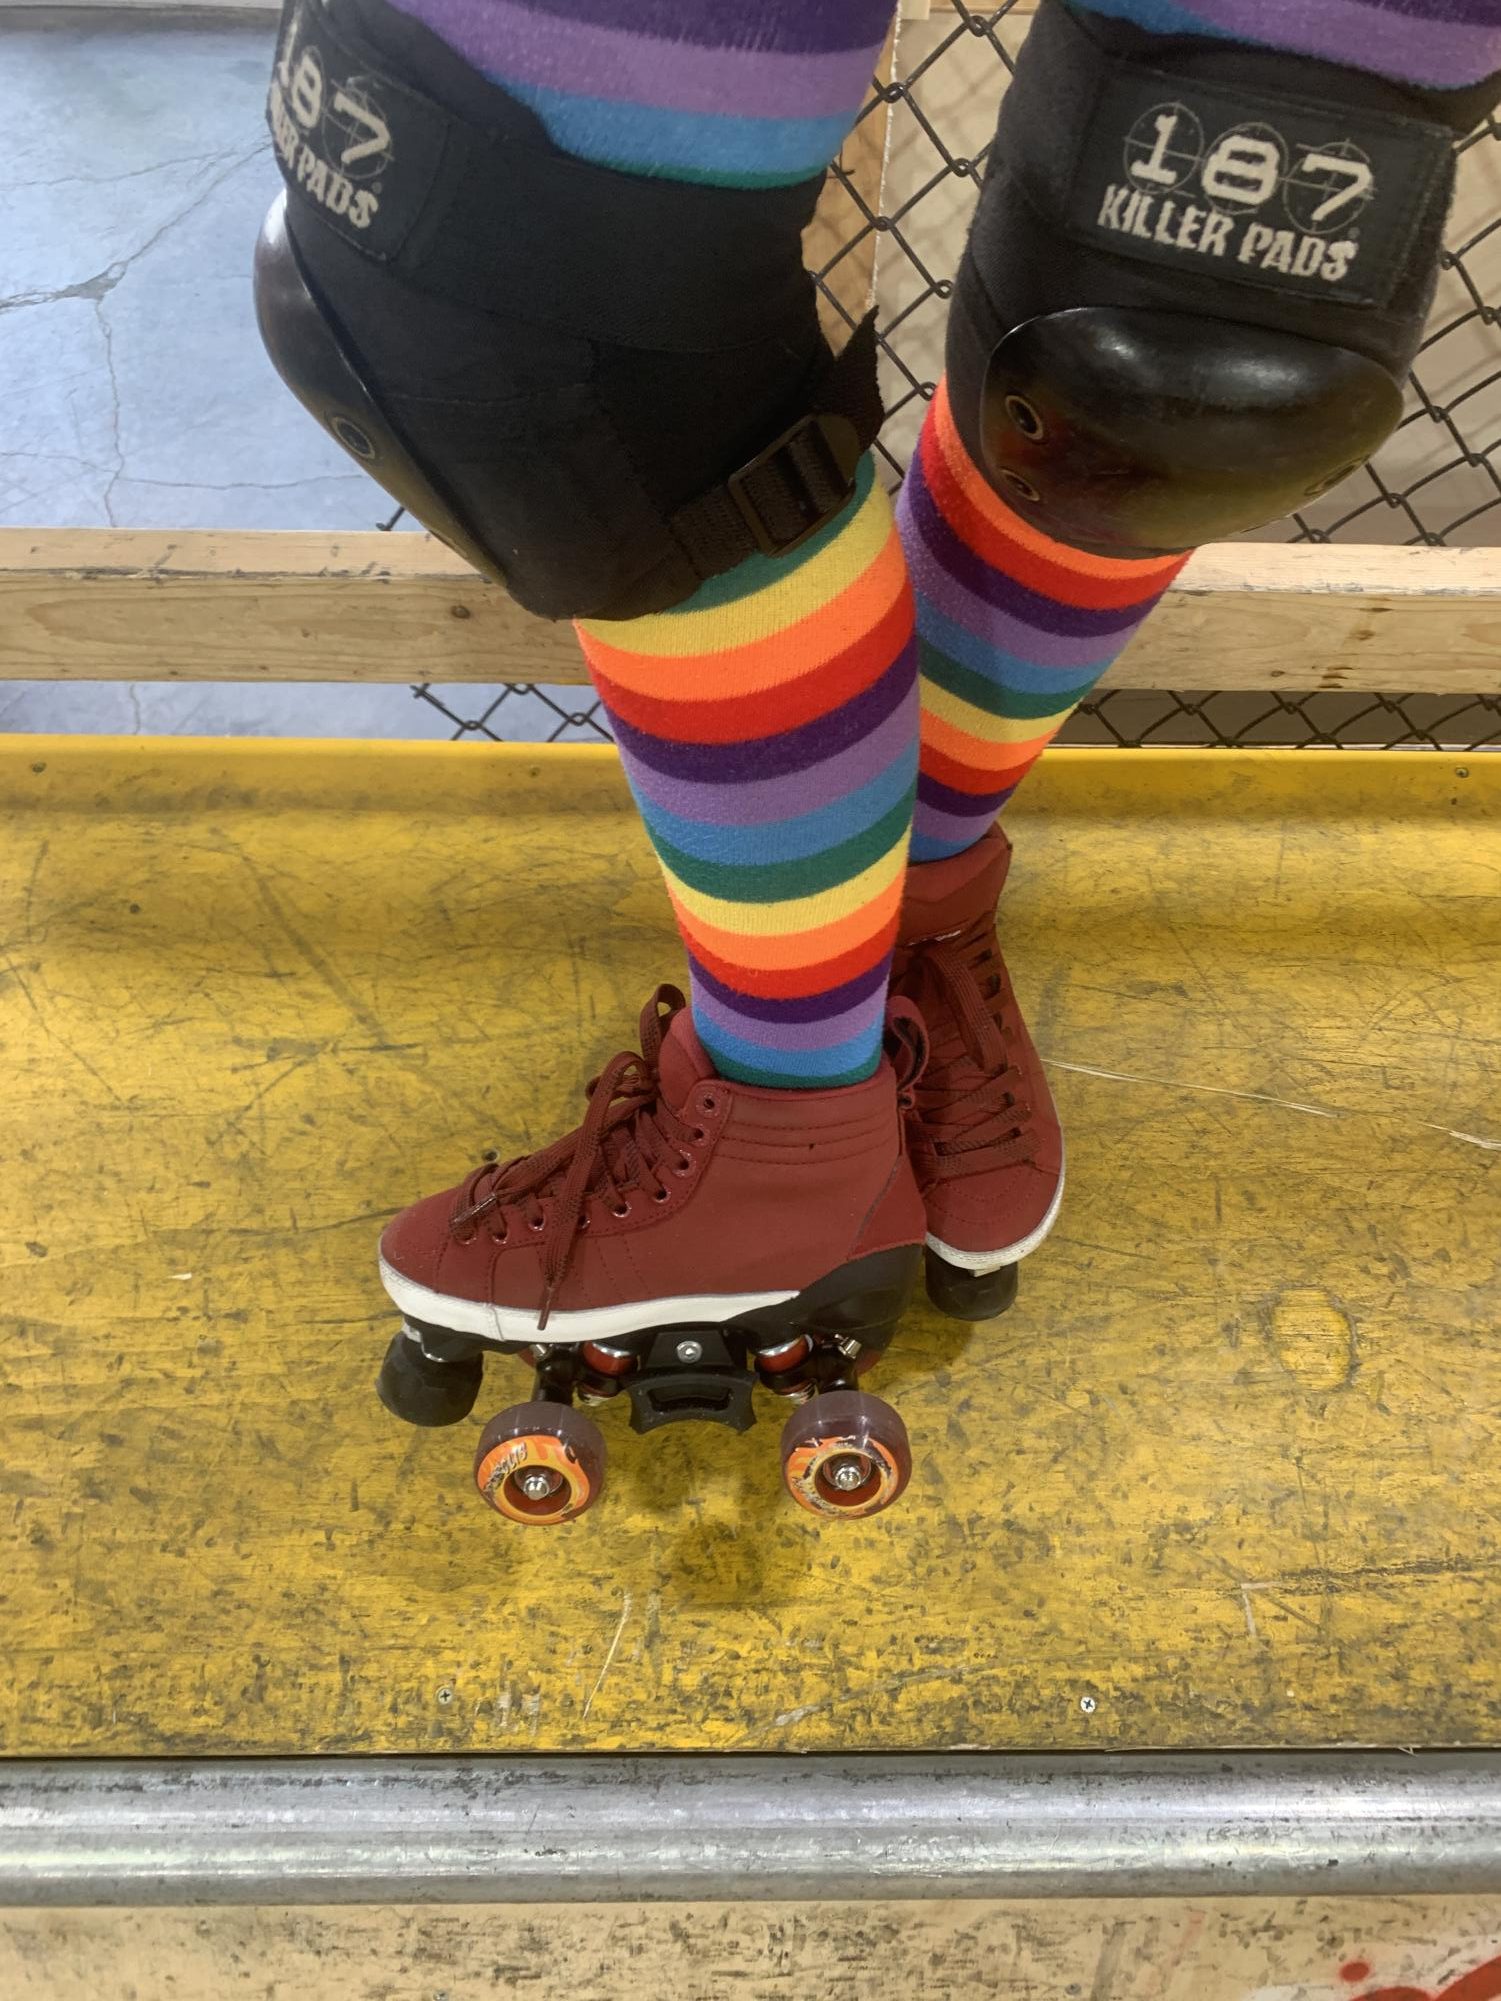 Stellar showing off her skates. Fun Fact: Most ramp skates have wider trucks and grind blocks. 